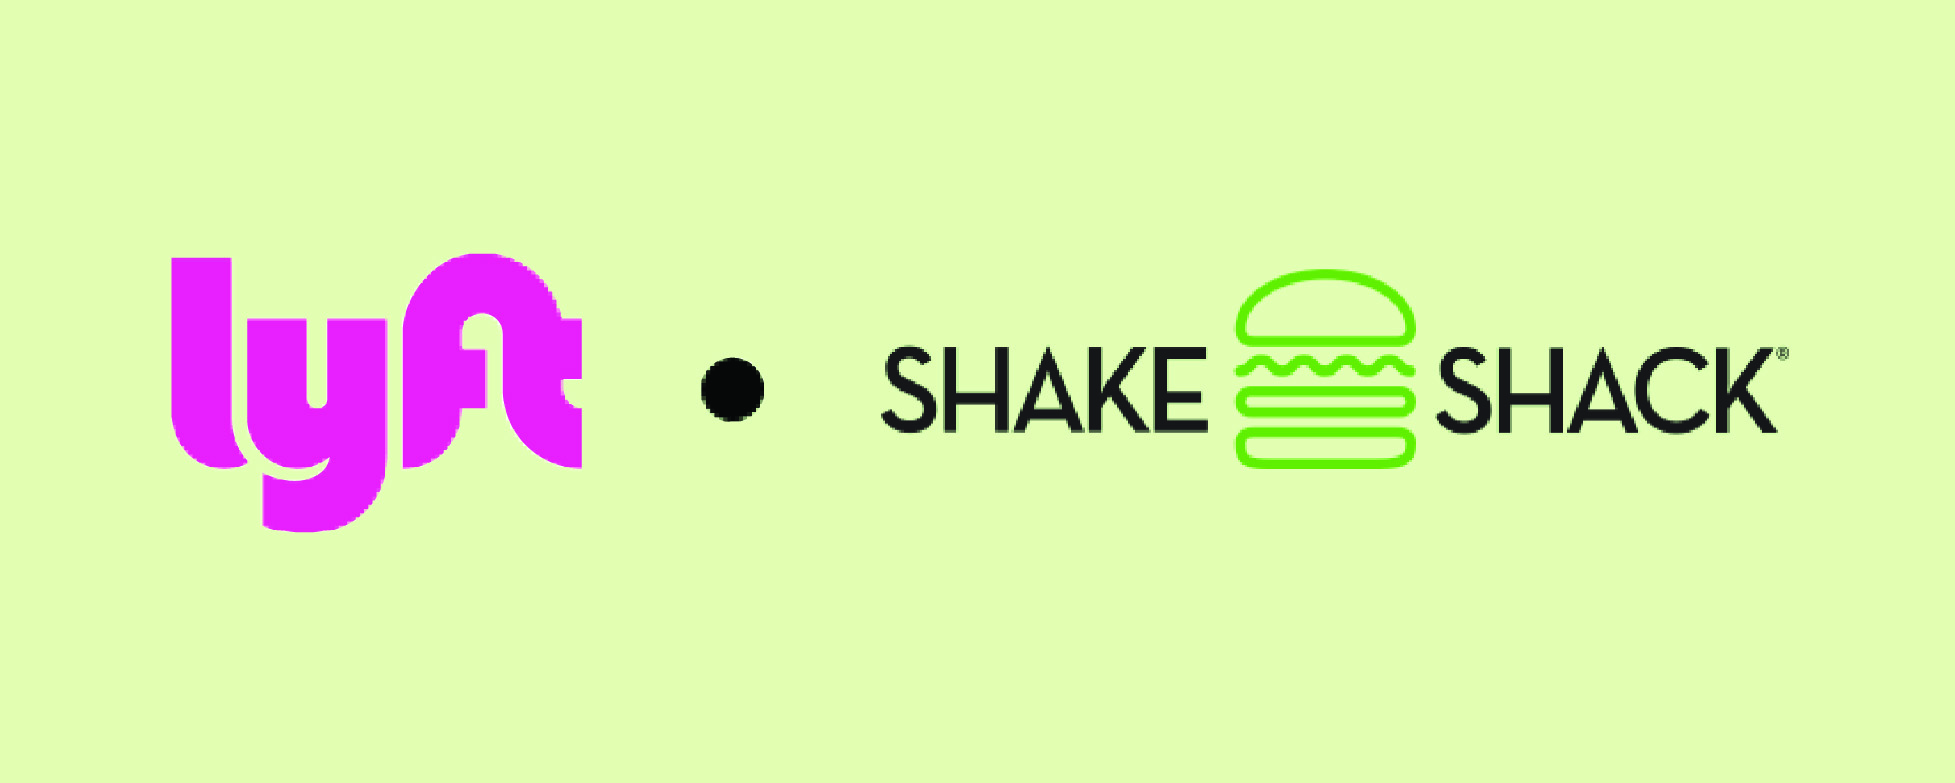 NYC: Get a Discounted Ride to a Free Shake at Shake Shack